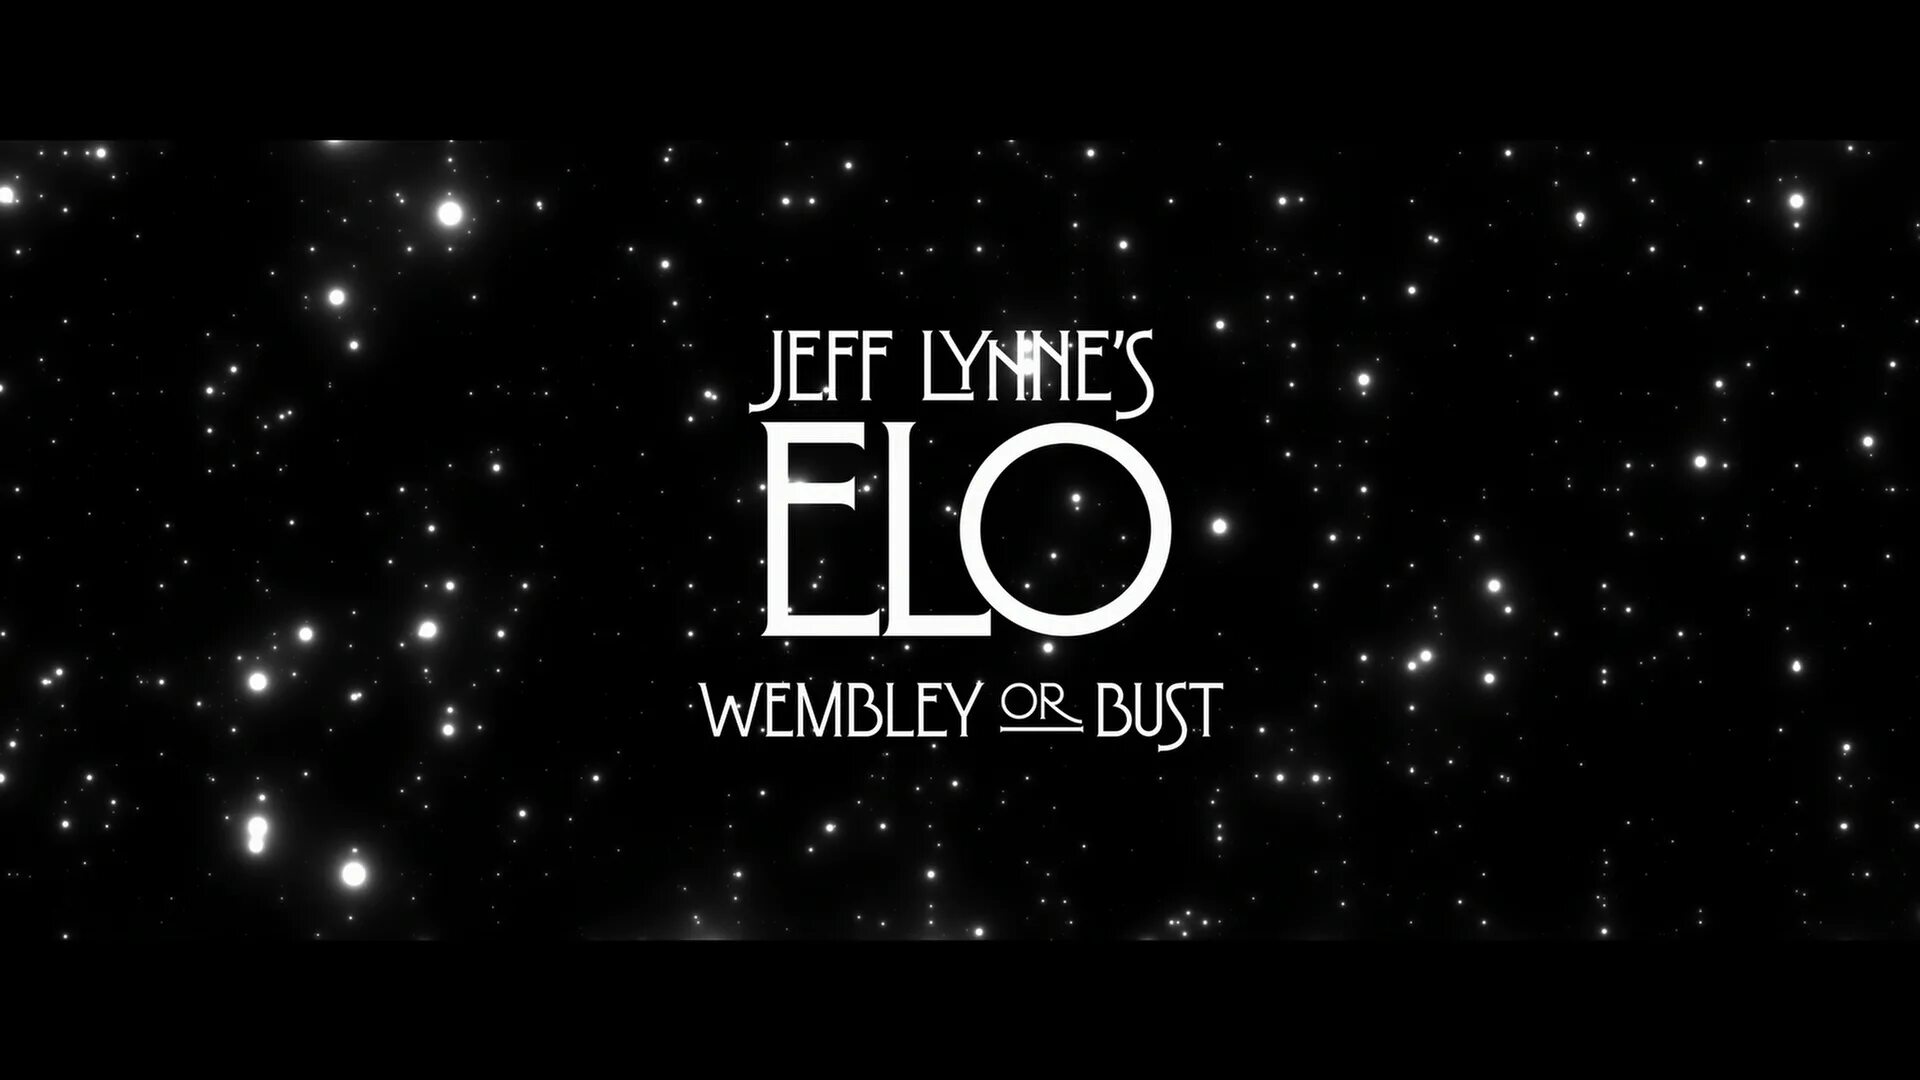 2017 flac. Jeff Lynne's Elo Wembley or Bust 2017. Electric Light Orchestra - Wembley or Bust (Disc 2) (2017). Electric Light Orchestra - Wembley or Bust (Disc 1) 2017. Jeff Lynne молодой фото.